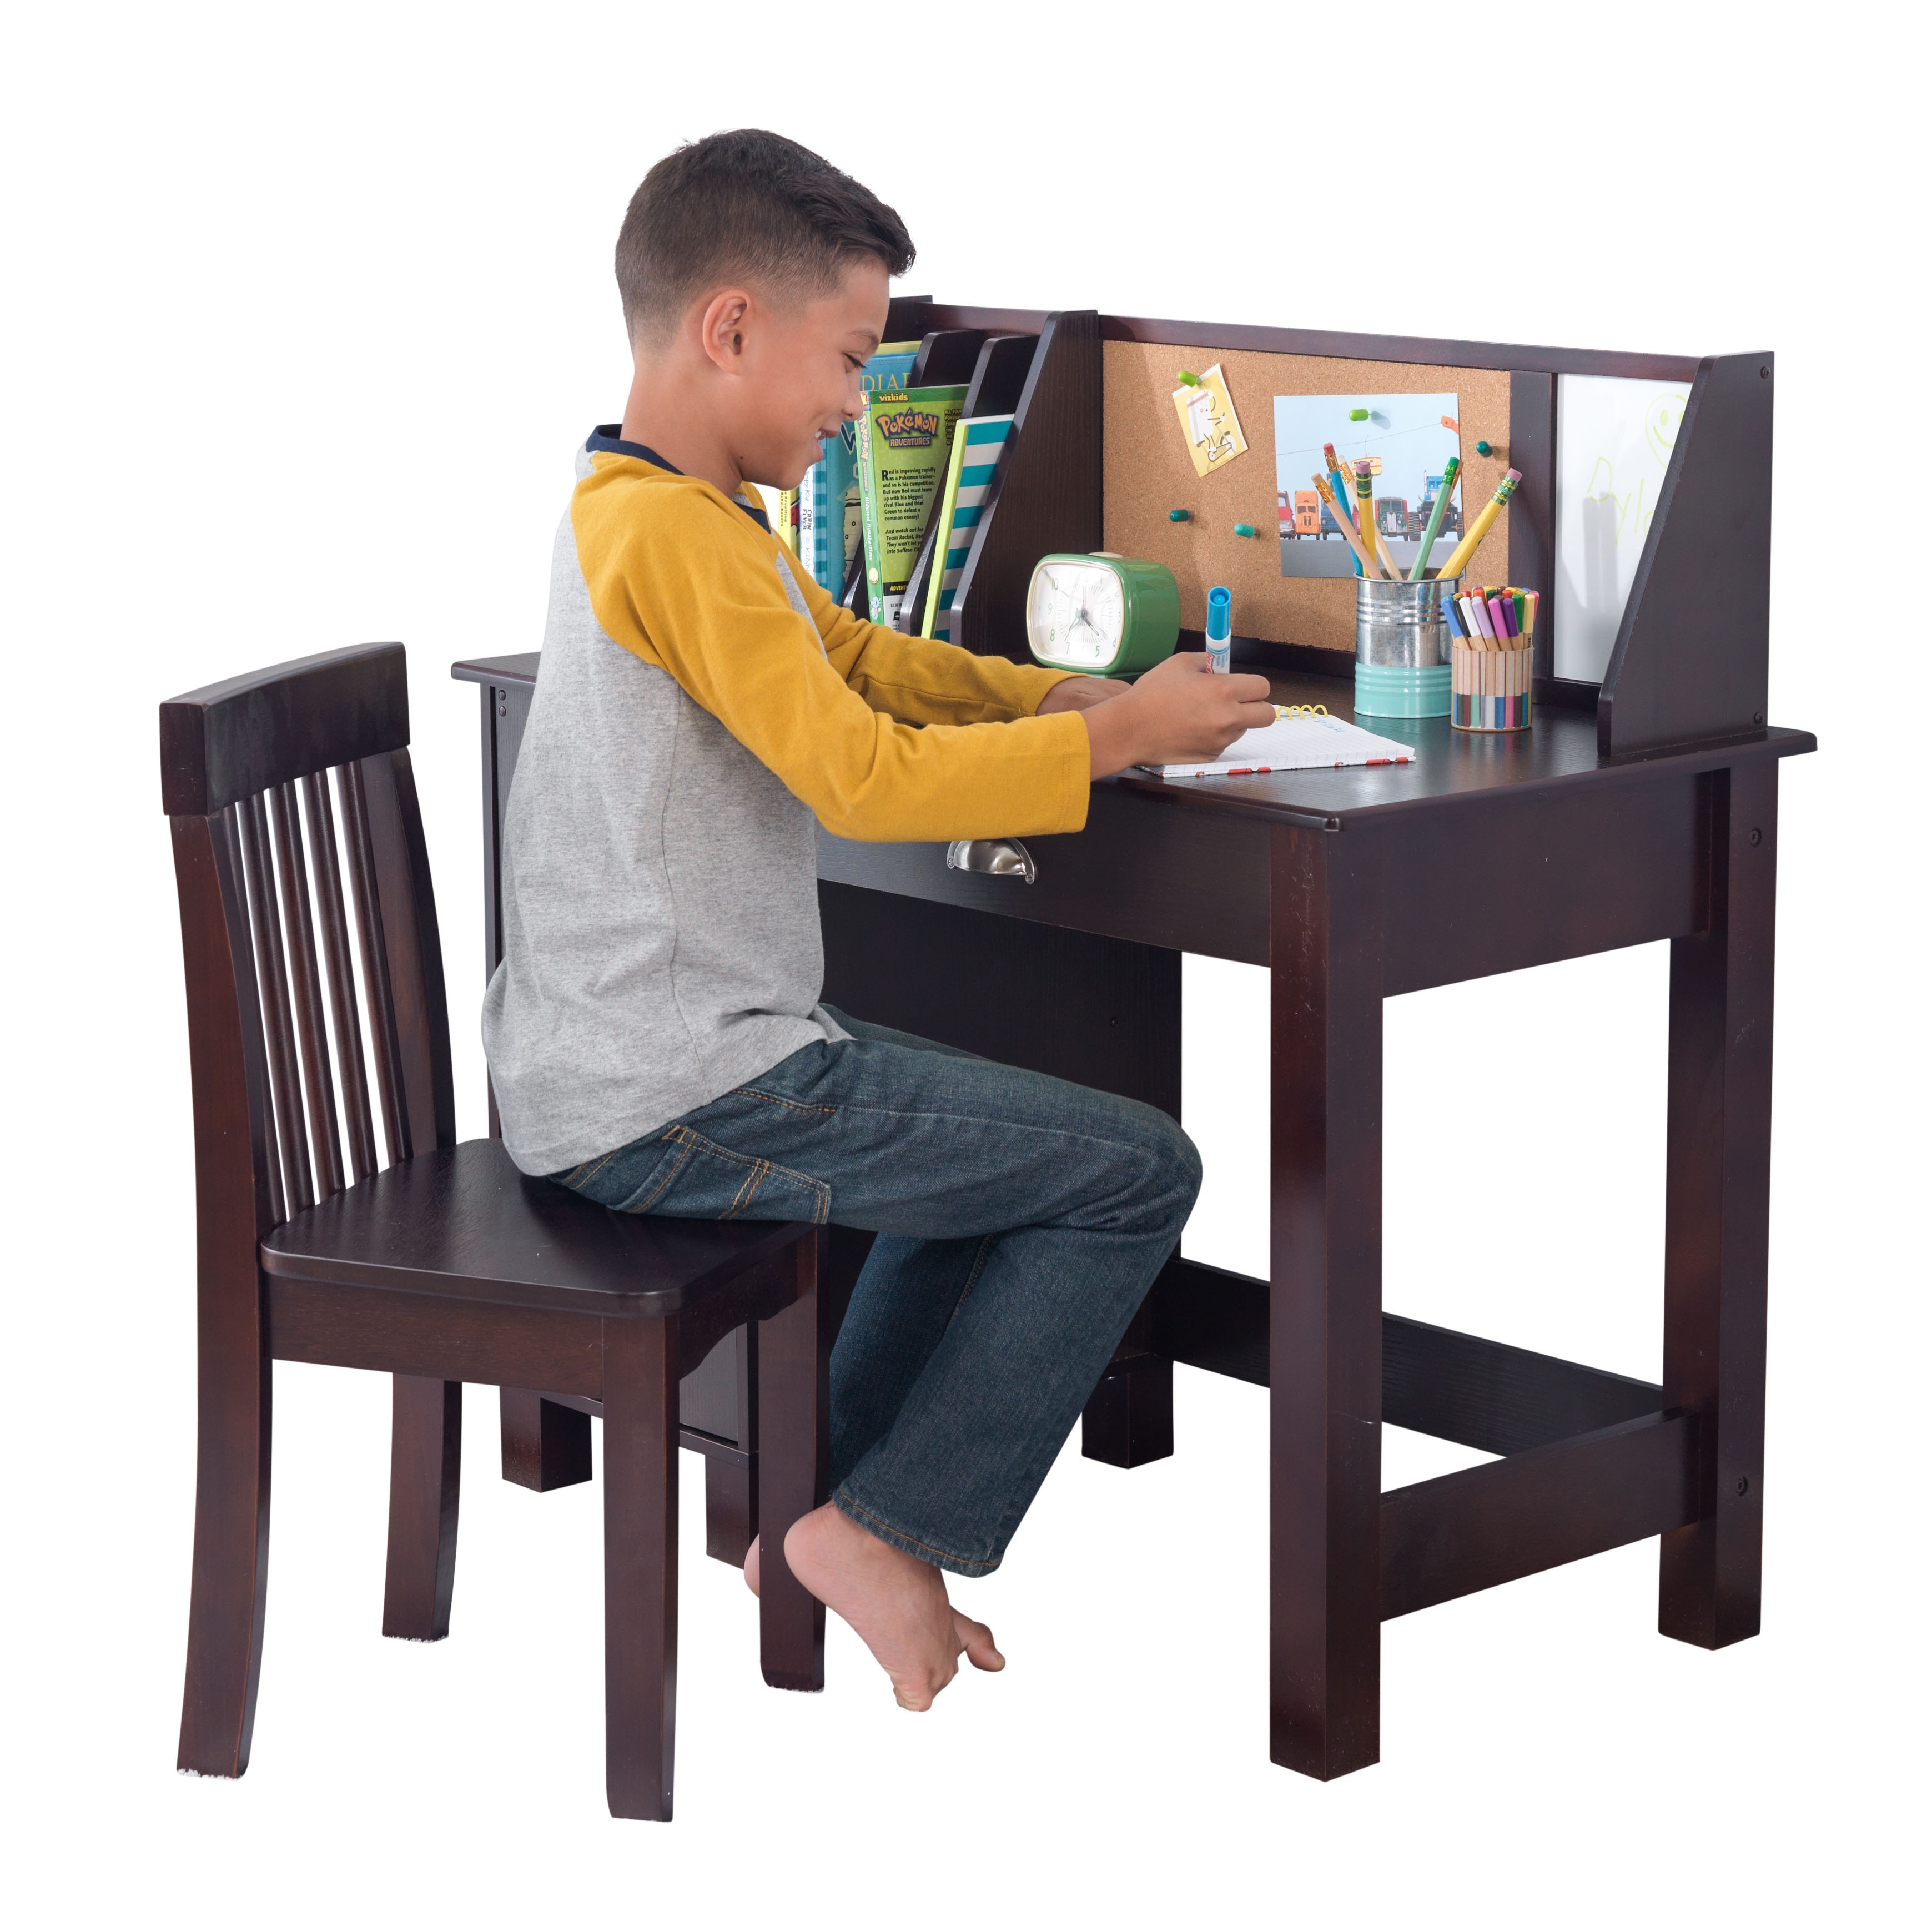 kidkraft study desk & chair set